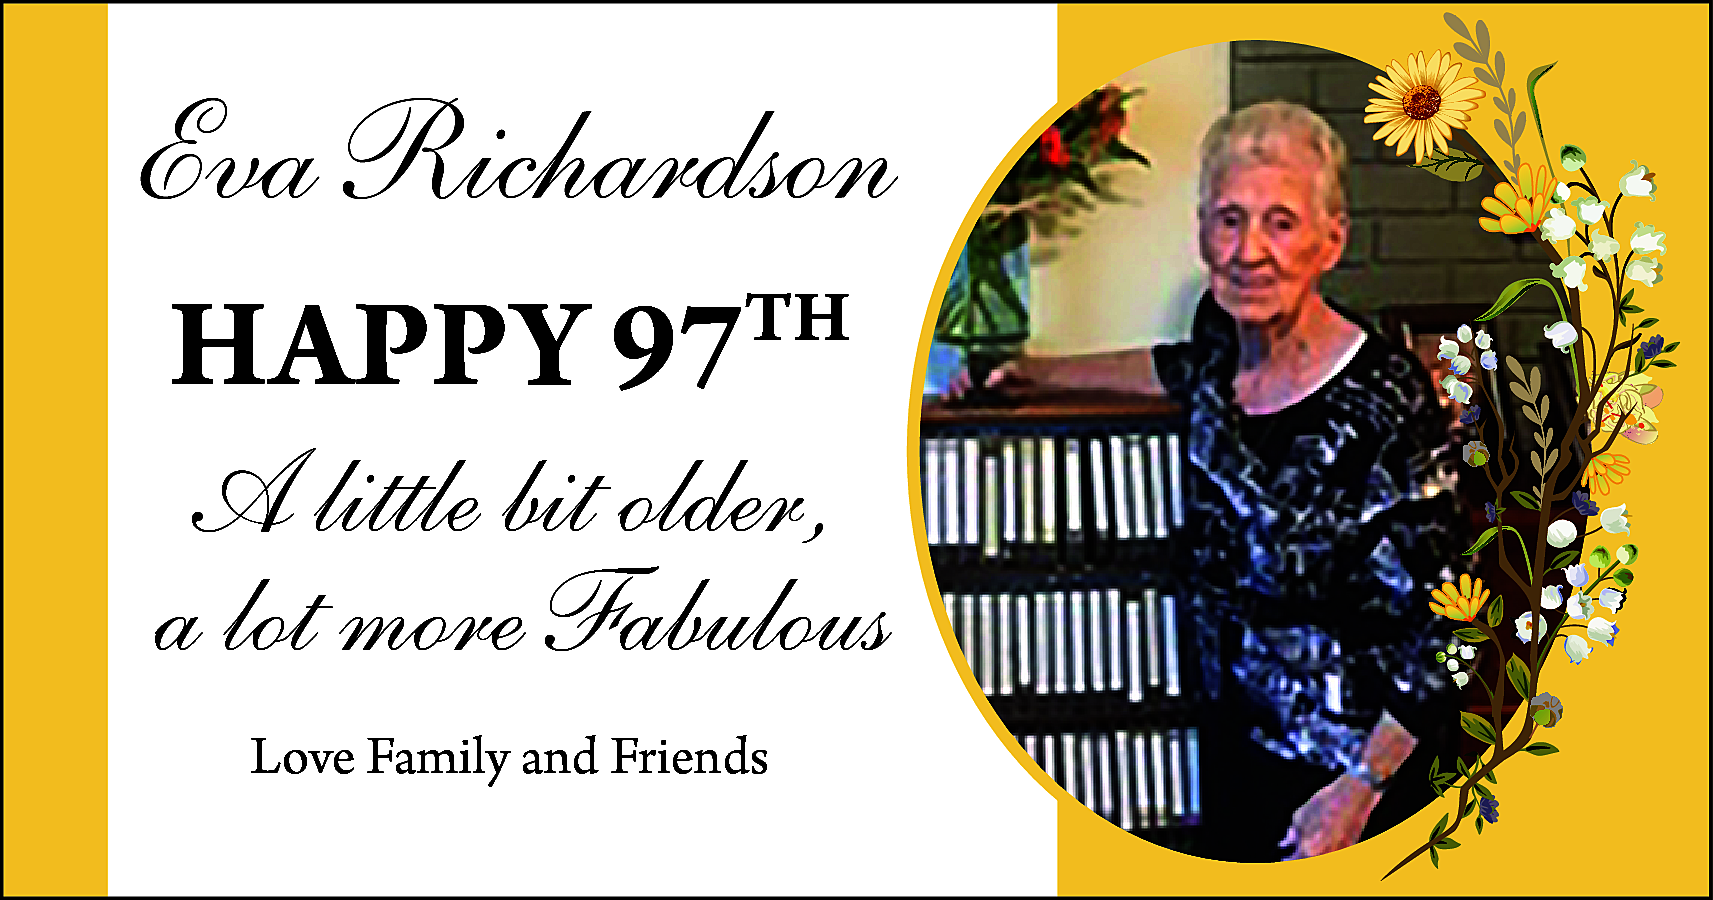 Eva Richardson <br>HAPPY 97TH <br>  Eva Richardson  HAPPY 97TH    A little bit older,  a lot more Fabulous  Love Family and Friends    